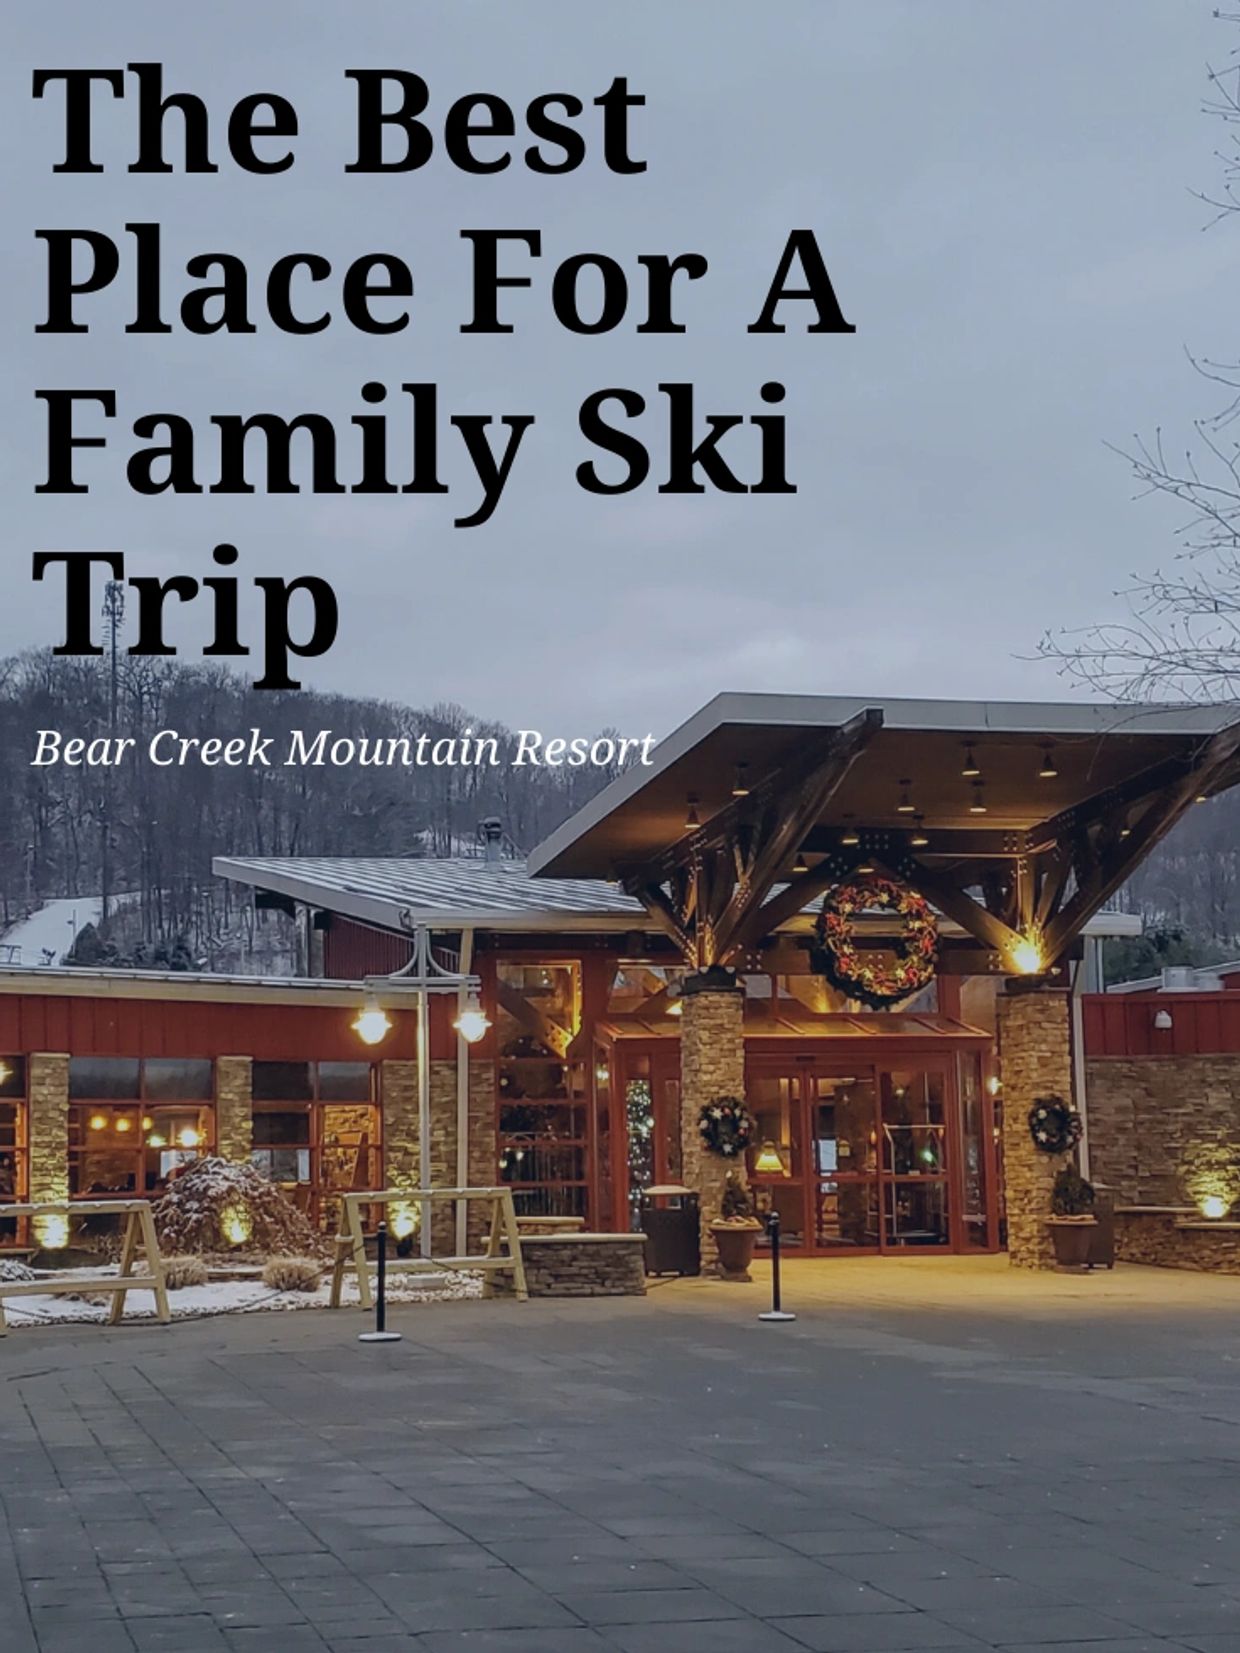 bear creek mountain resort, ski resorts near me, ski resorts in pa, skiing in pa